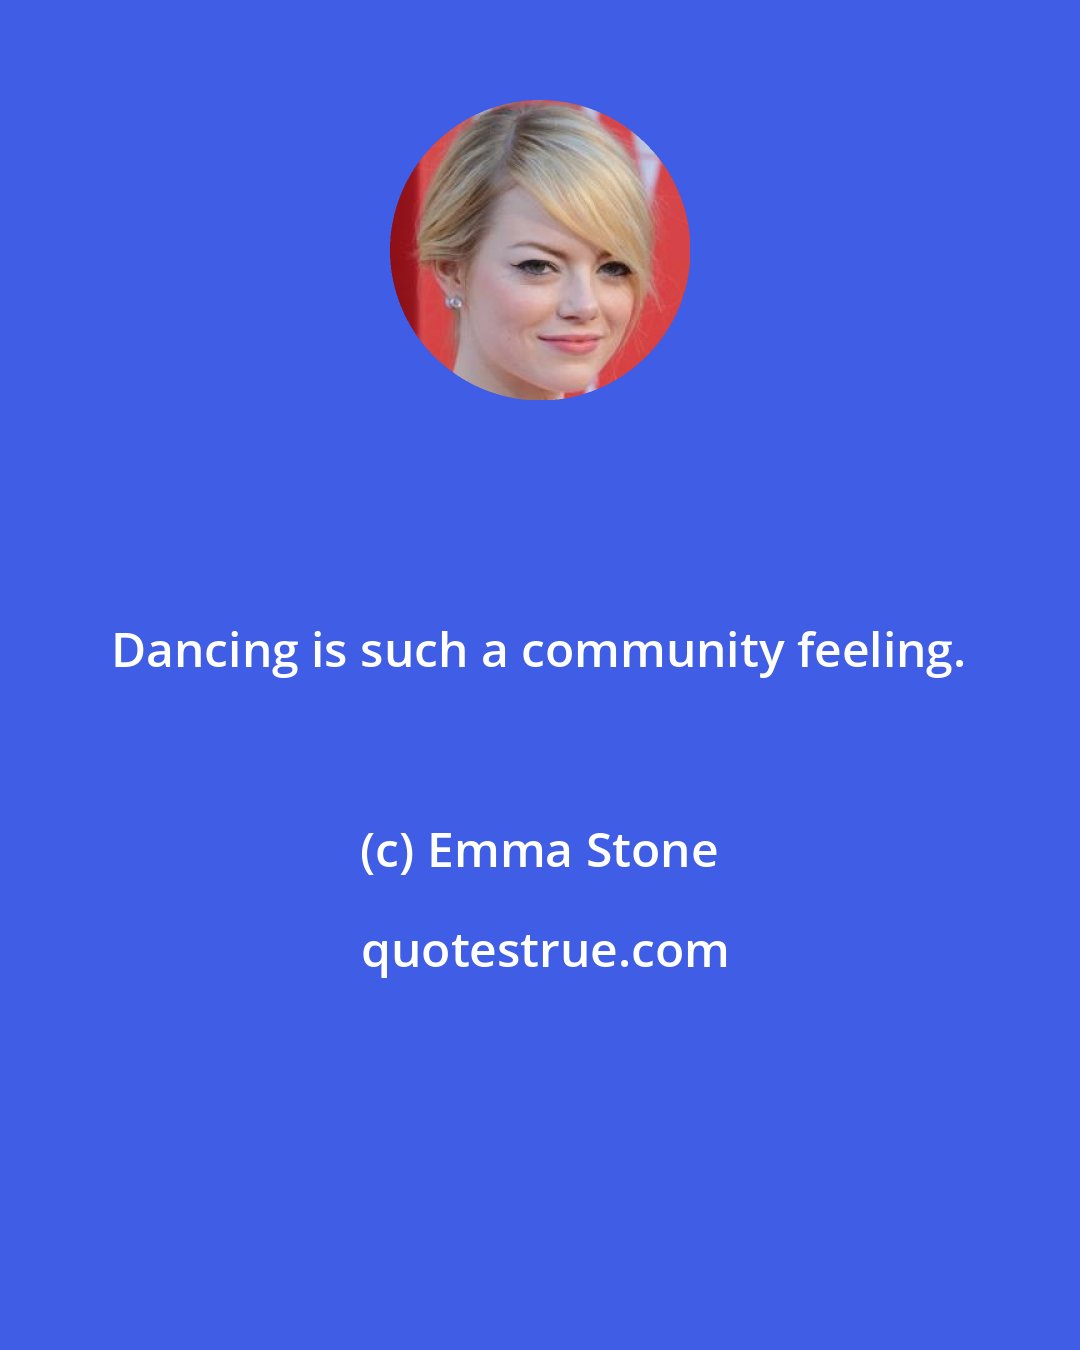 Emma Stone: Dancing is such a community feeling.